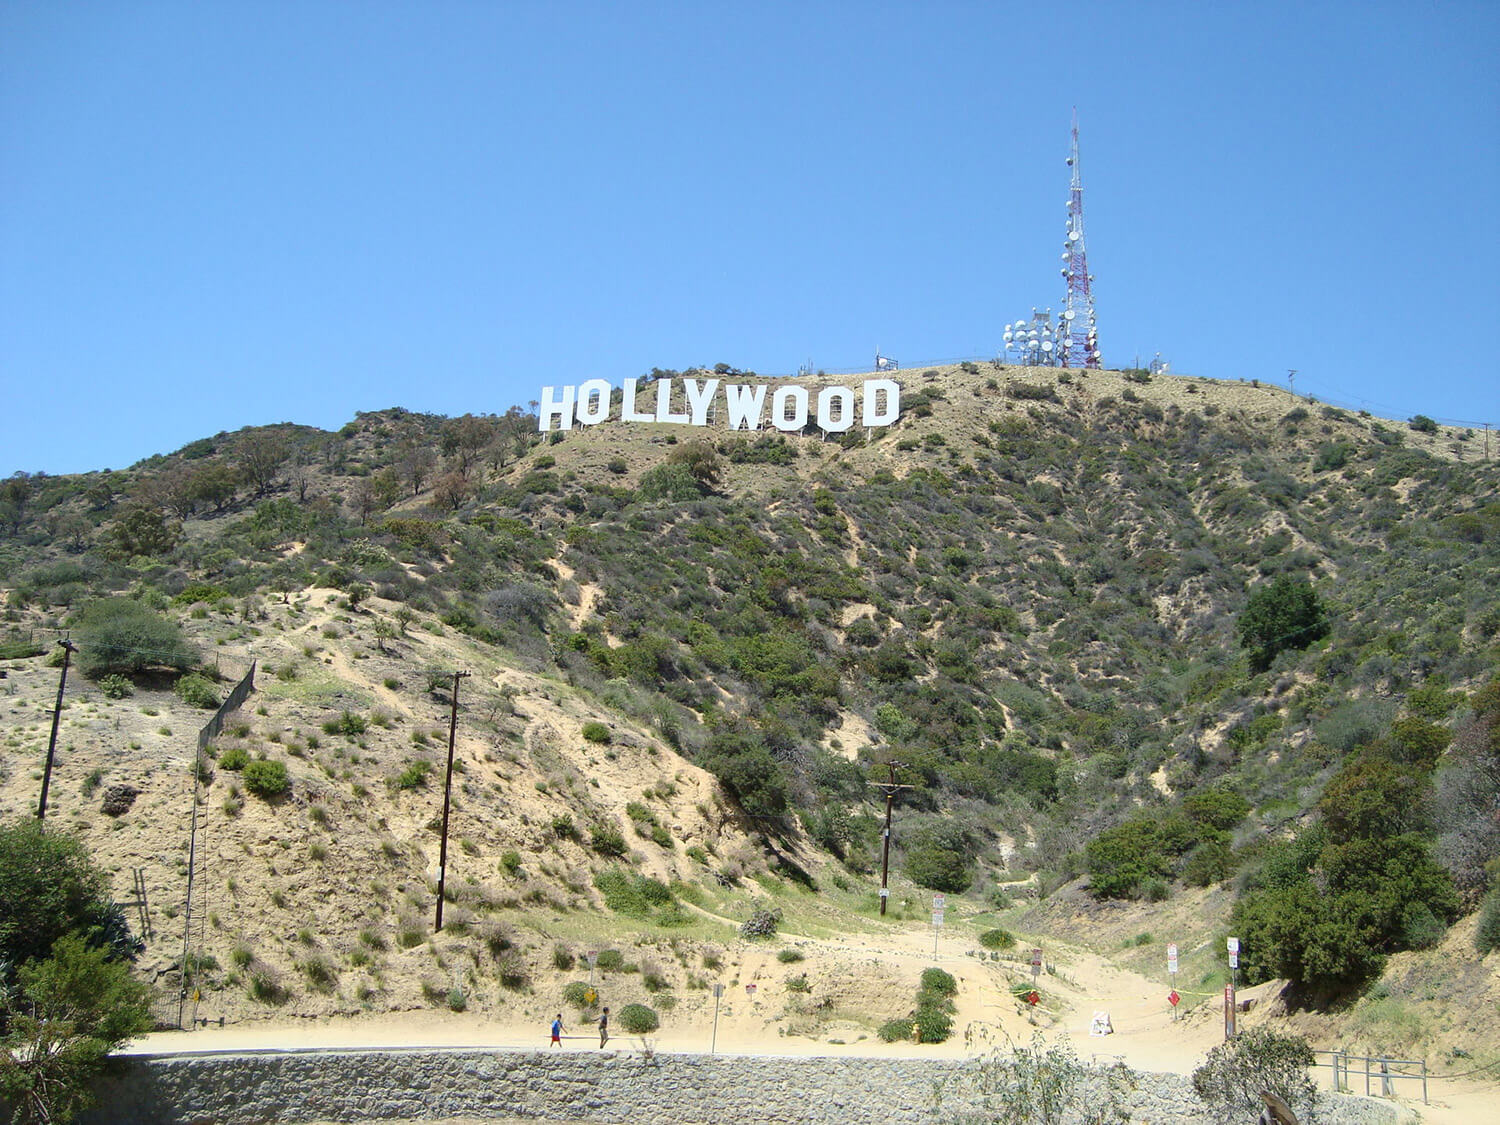 Hollywood sign (photo courtesy Pimlico27/Wikipedia)